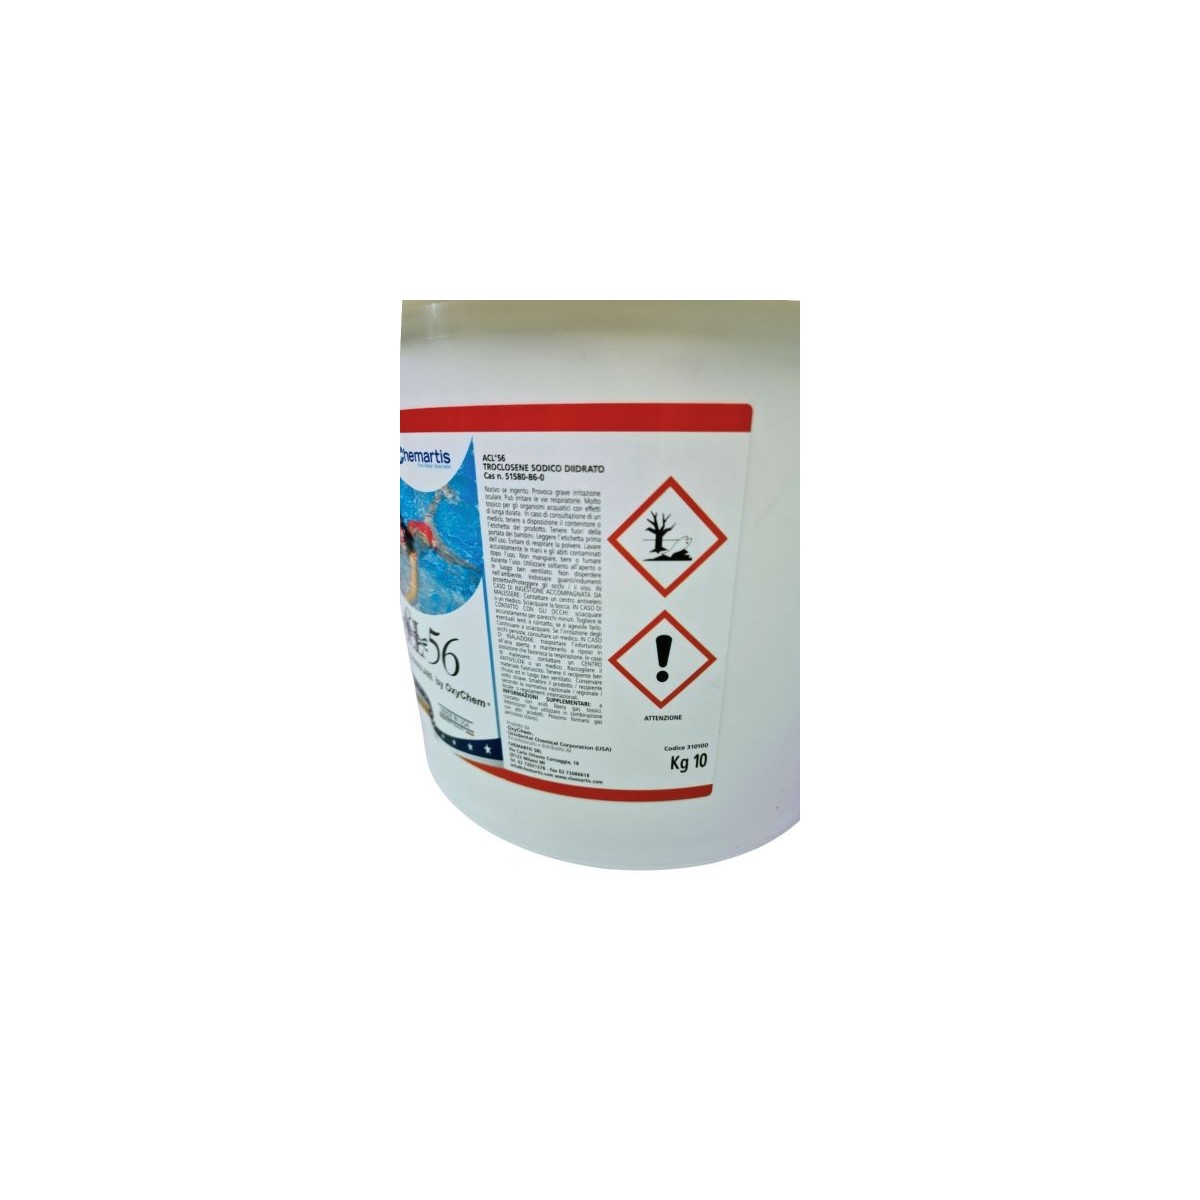 Buy ACL Granular dichloro 56% dihydrate.